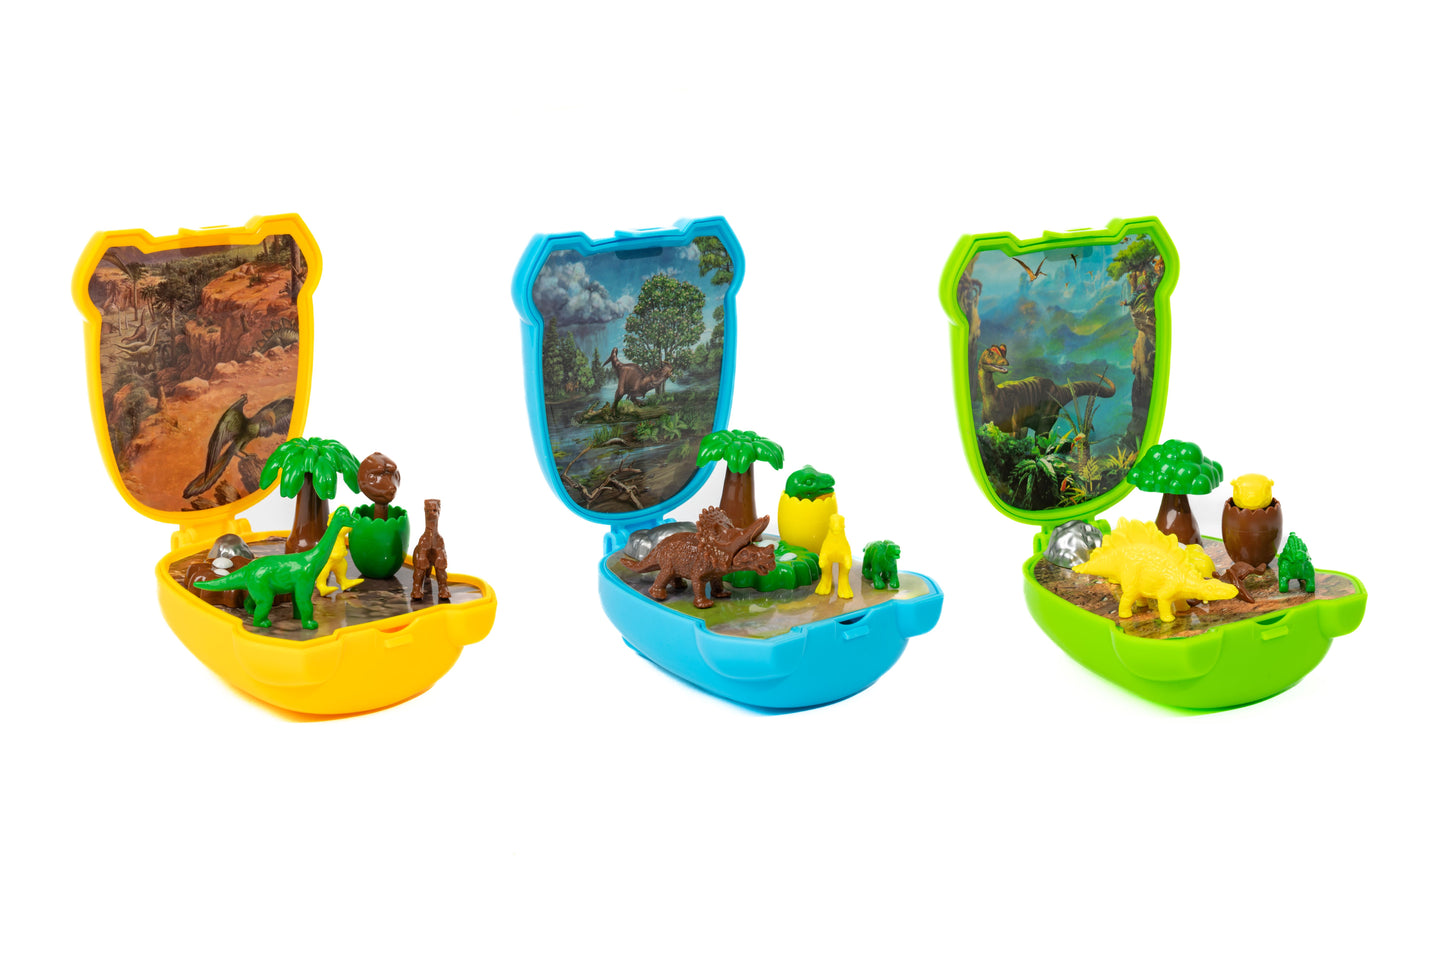 Dinosaur Mini Worlds, Miniature Dino Figurine Toys